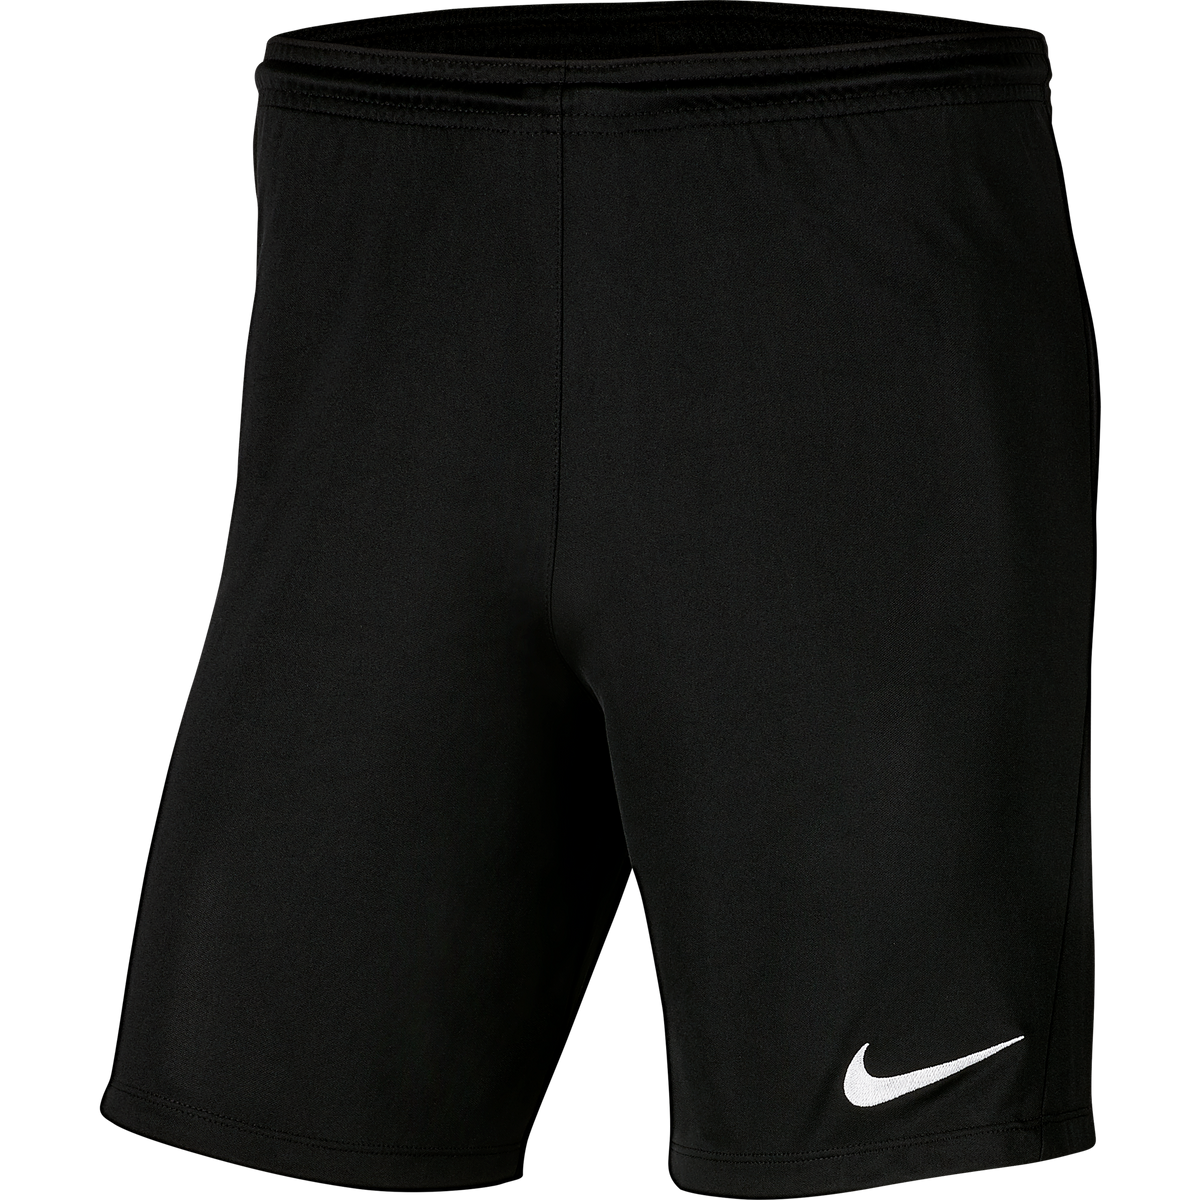 Kirkham Juniors FC Goalkeeper Shorts